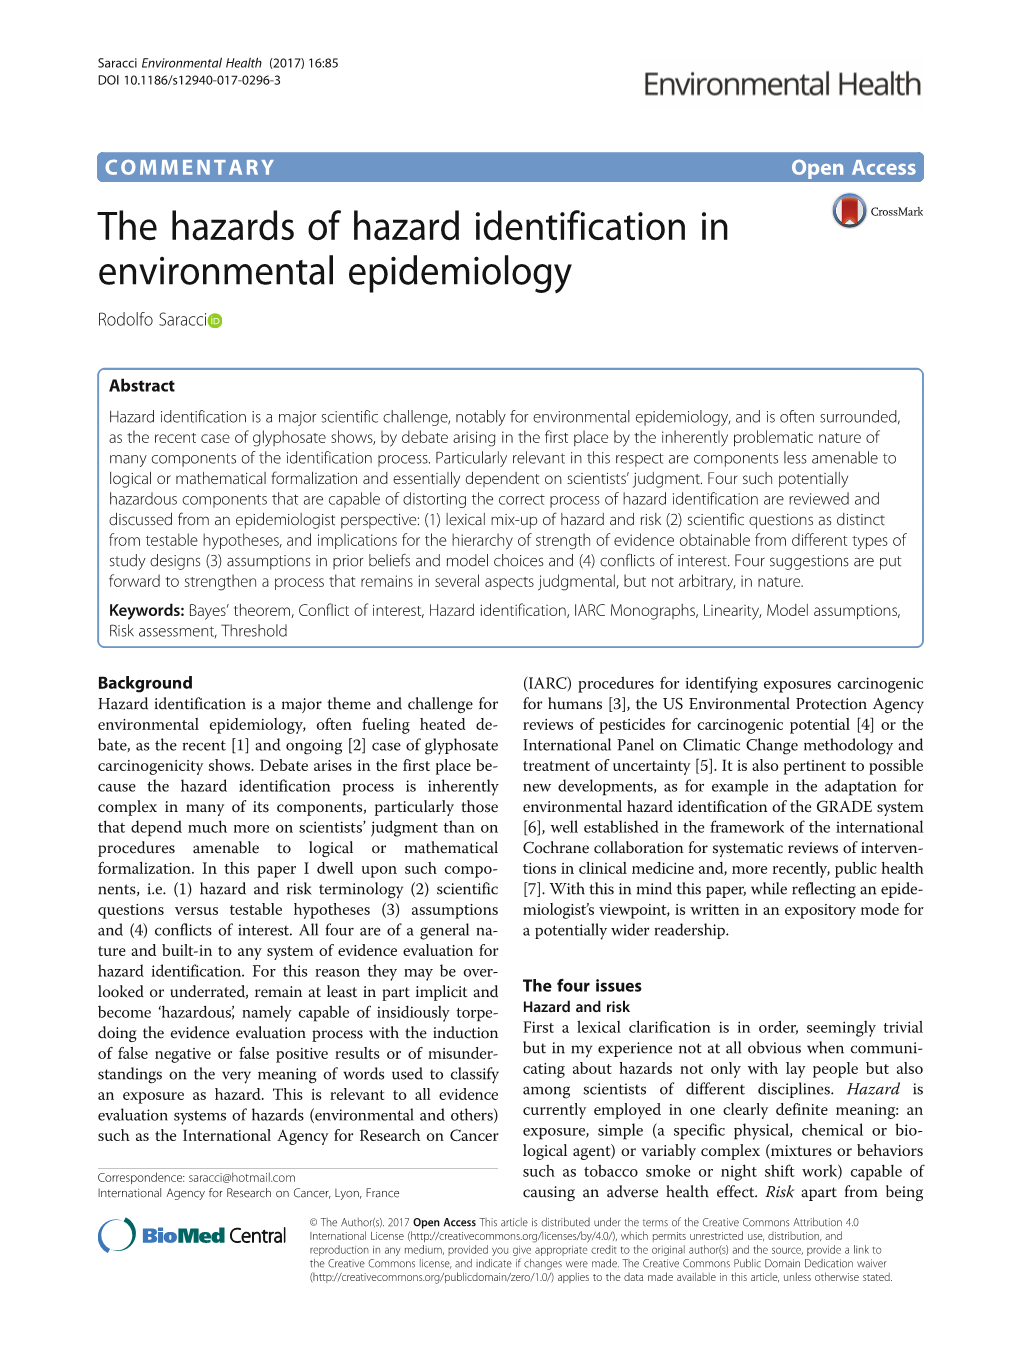 The Hazards of Hazard Identification in Environmental Epidemiology Rodolfo Saracci